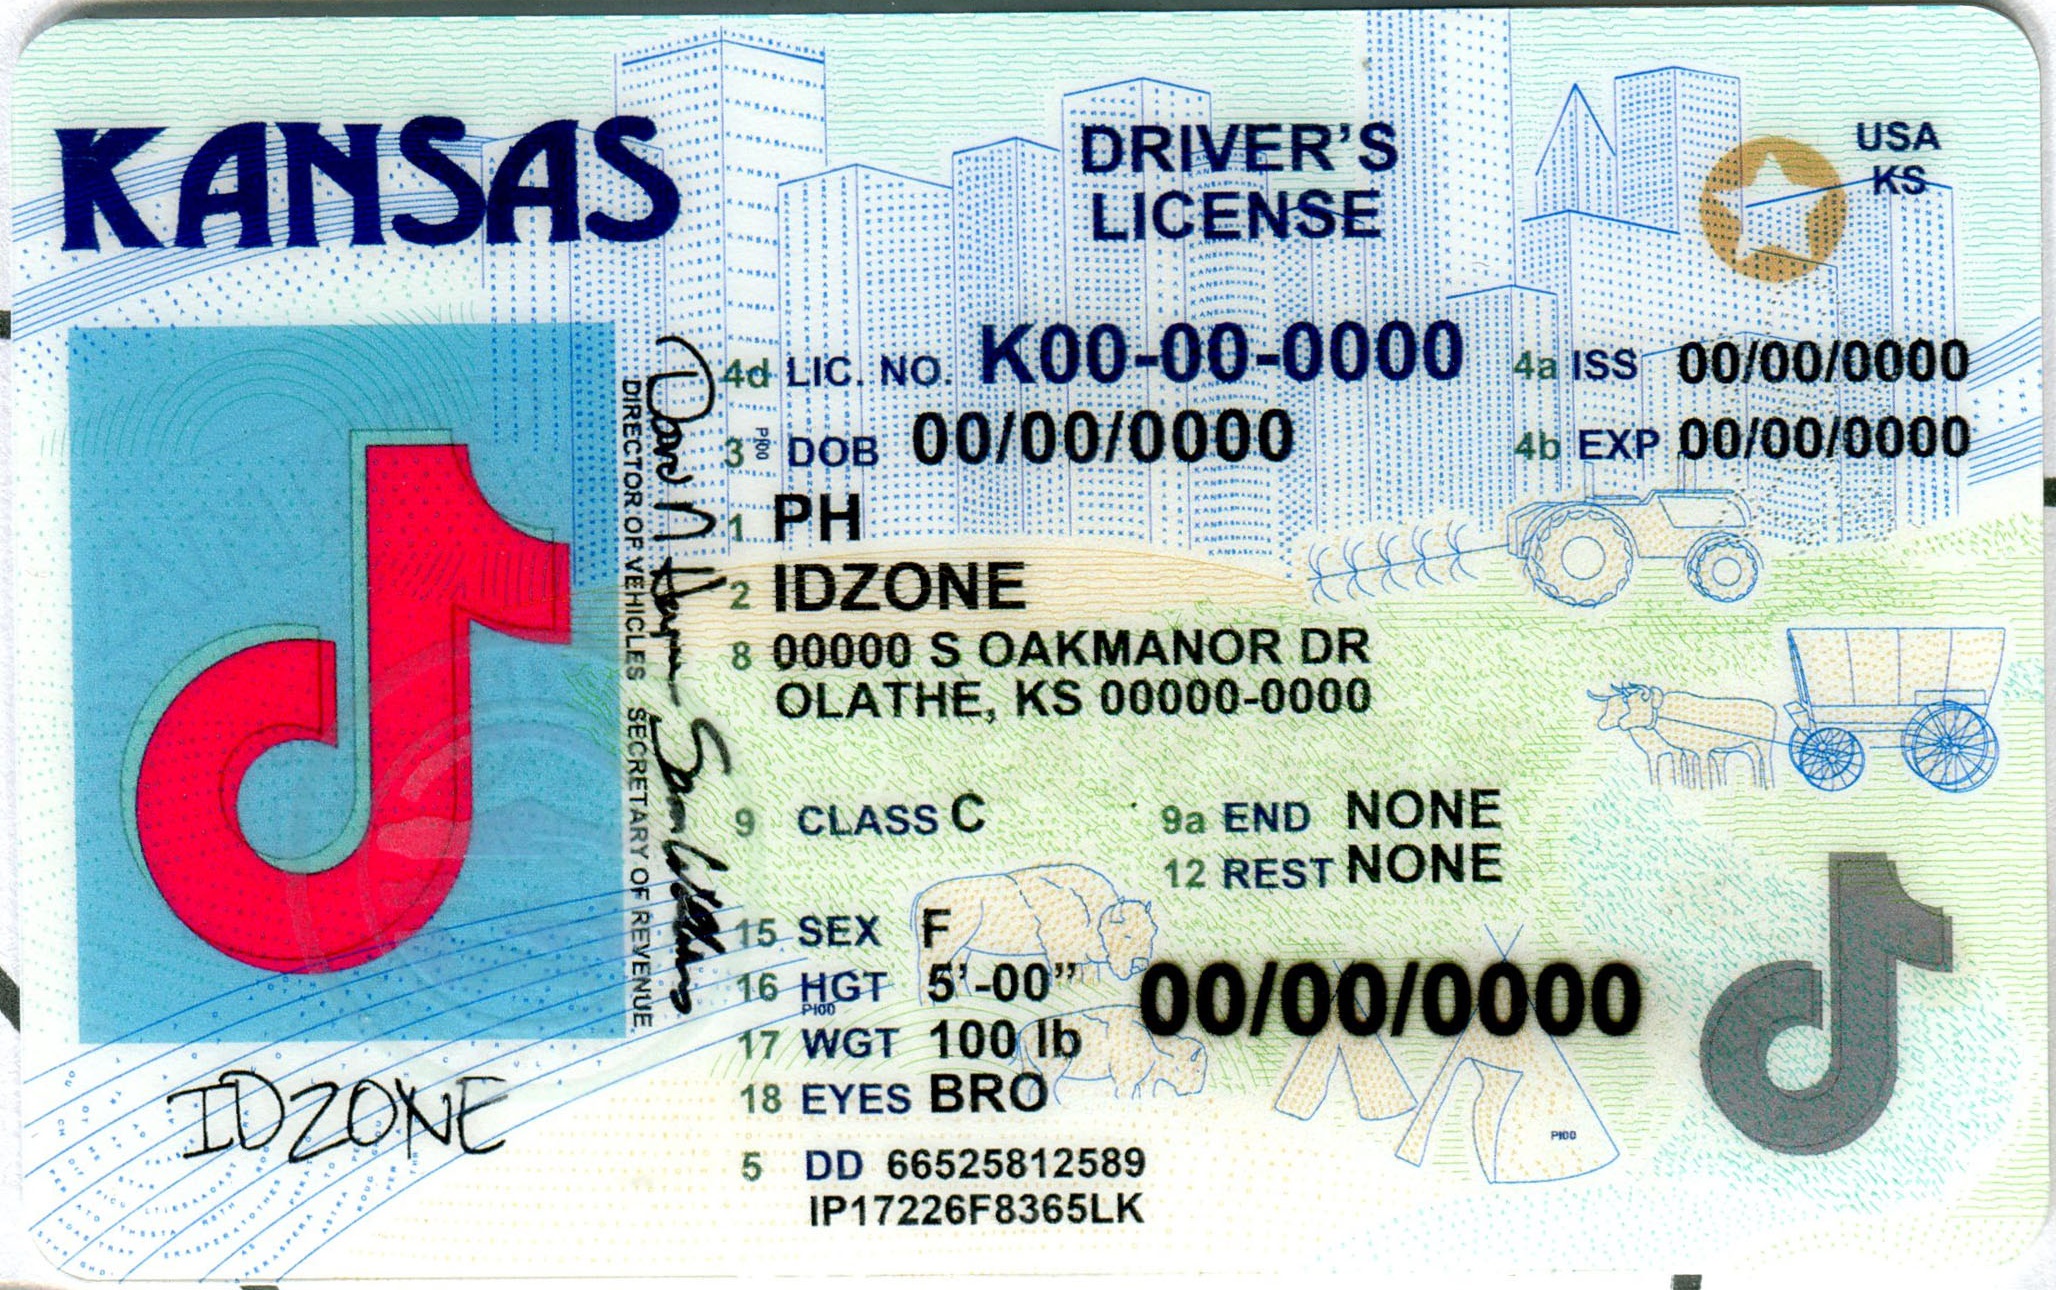 KANSAS-New fake id